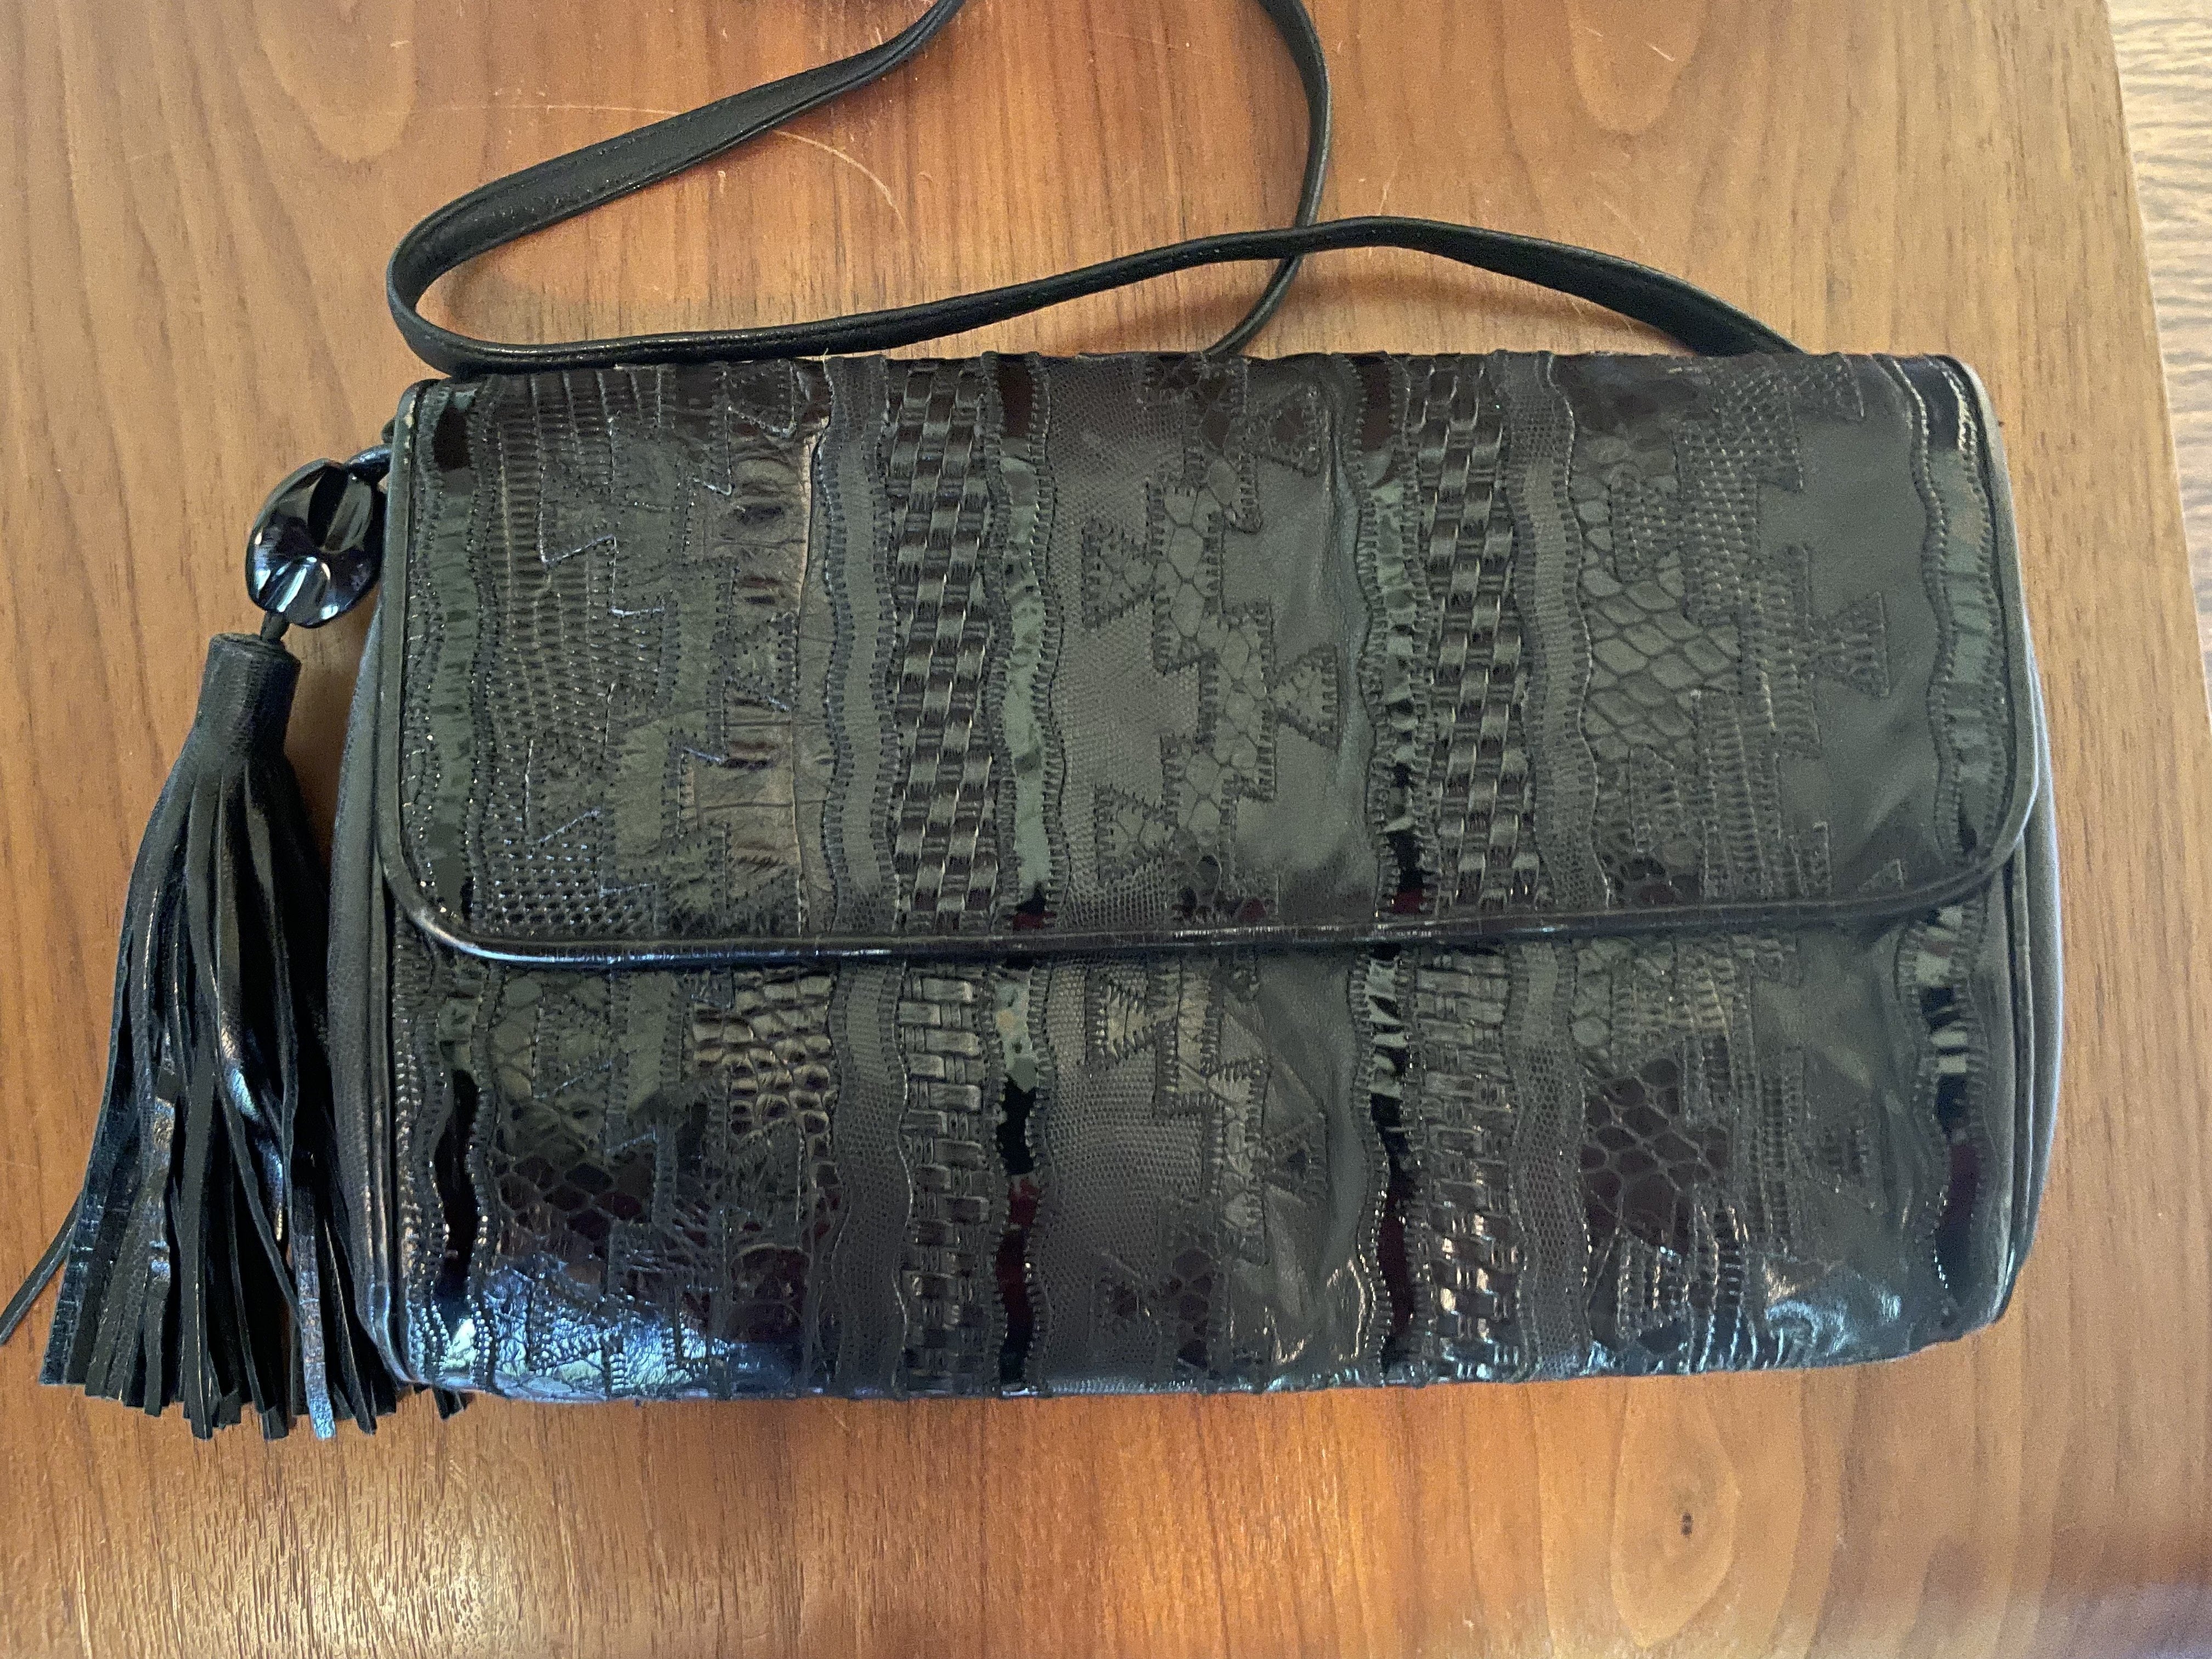 Buy Handicraft-Palace Multi Color Banjara Embroidery Bag tribal vintage  patchwork Bag leather Tote Shoulder Bag at Amazon.in